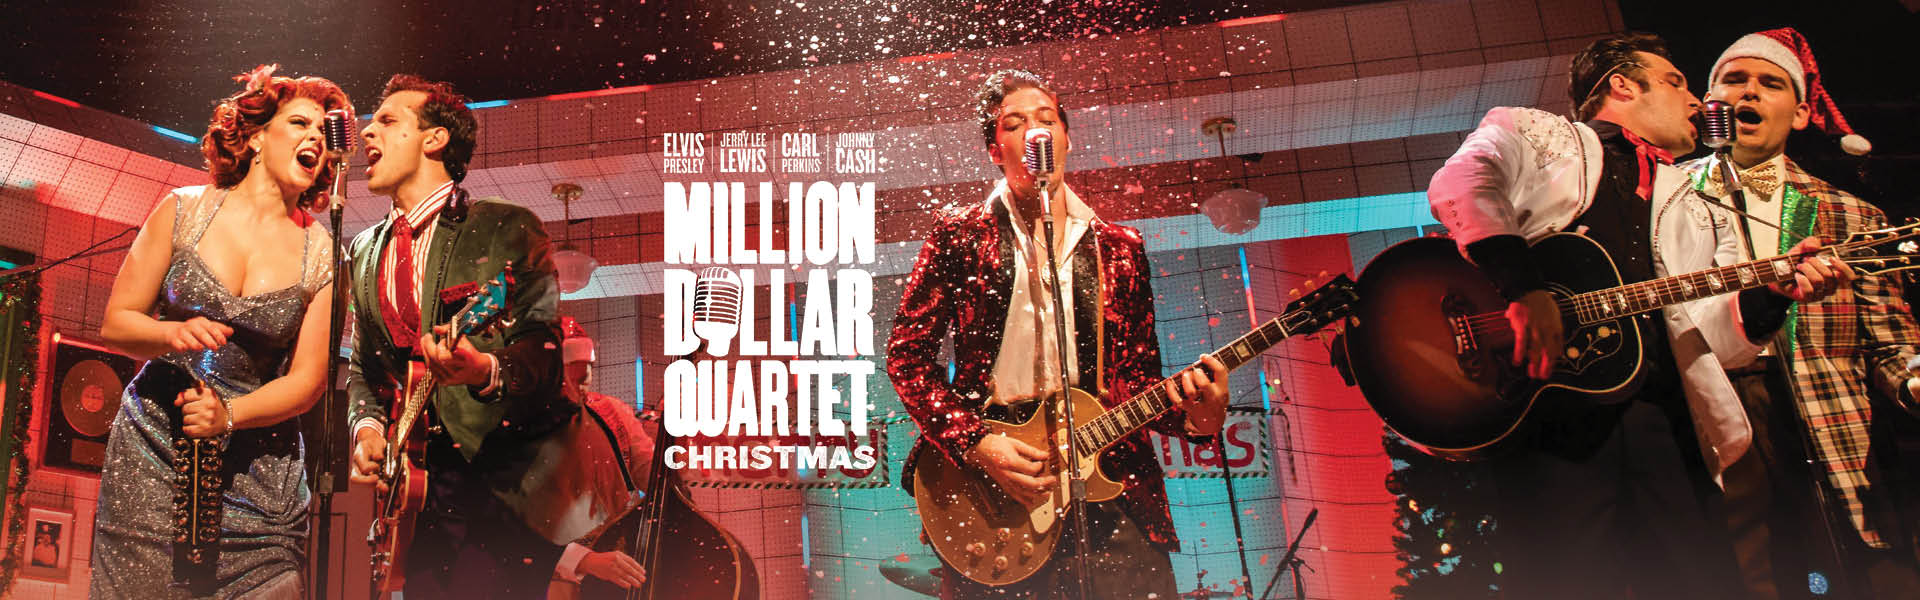 Picture of band Million Dollar Quartet